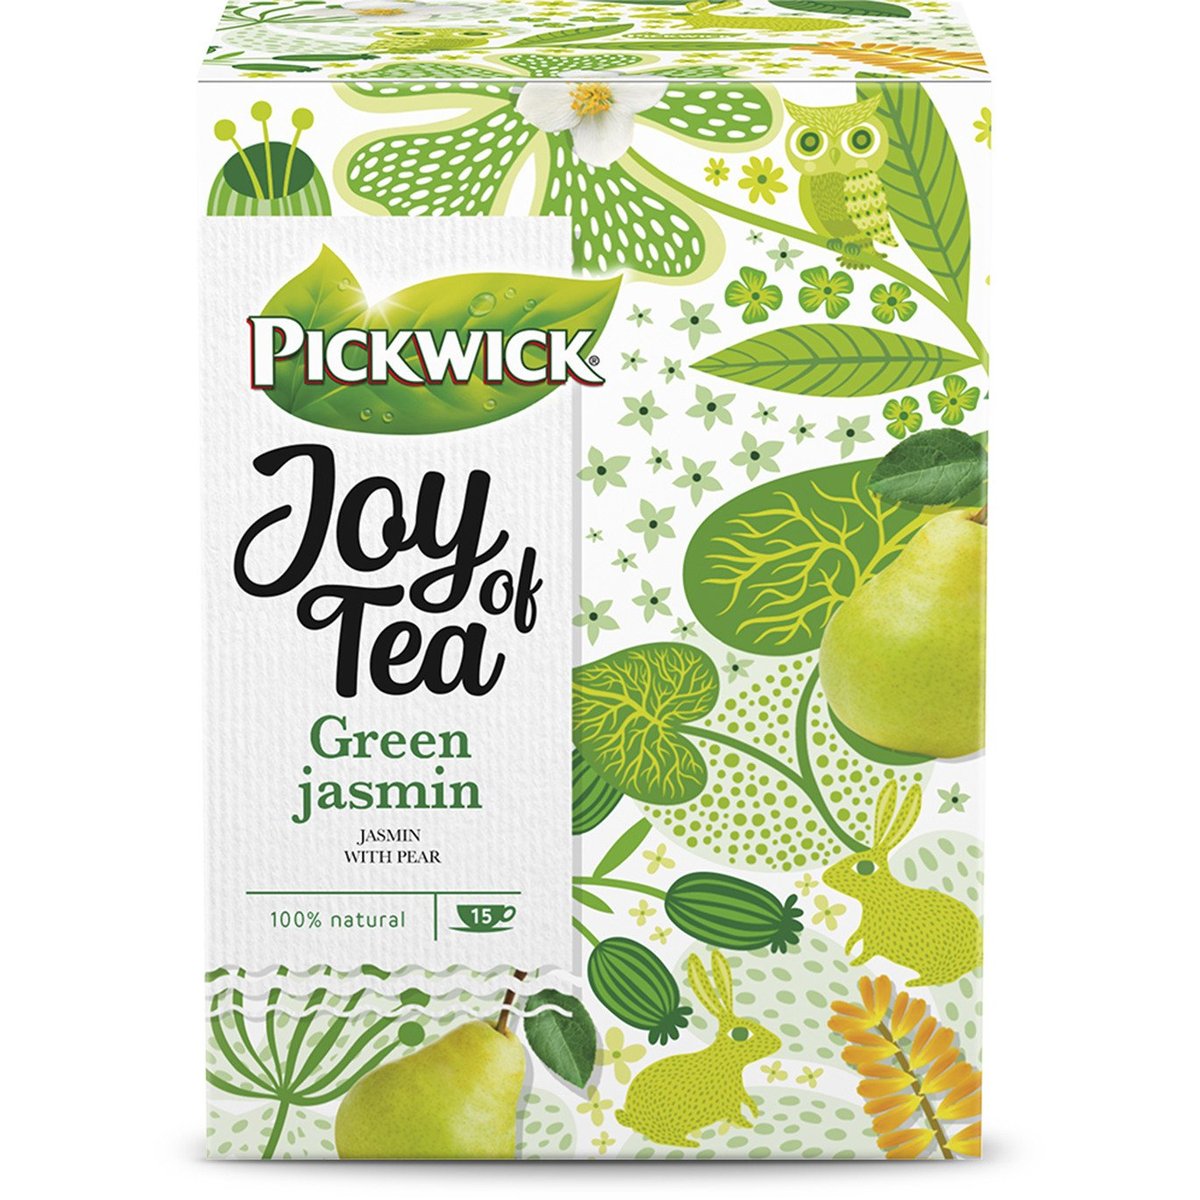 Pickwick čaj Joy of Tea Green jasmin